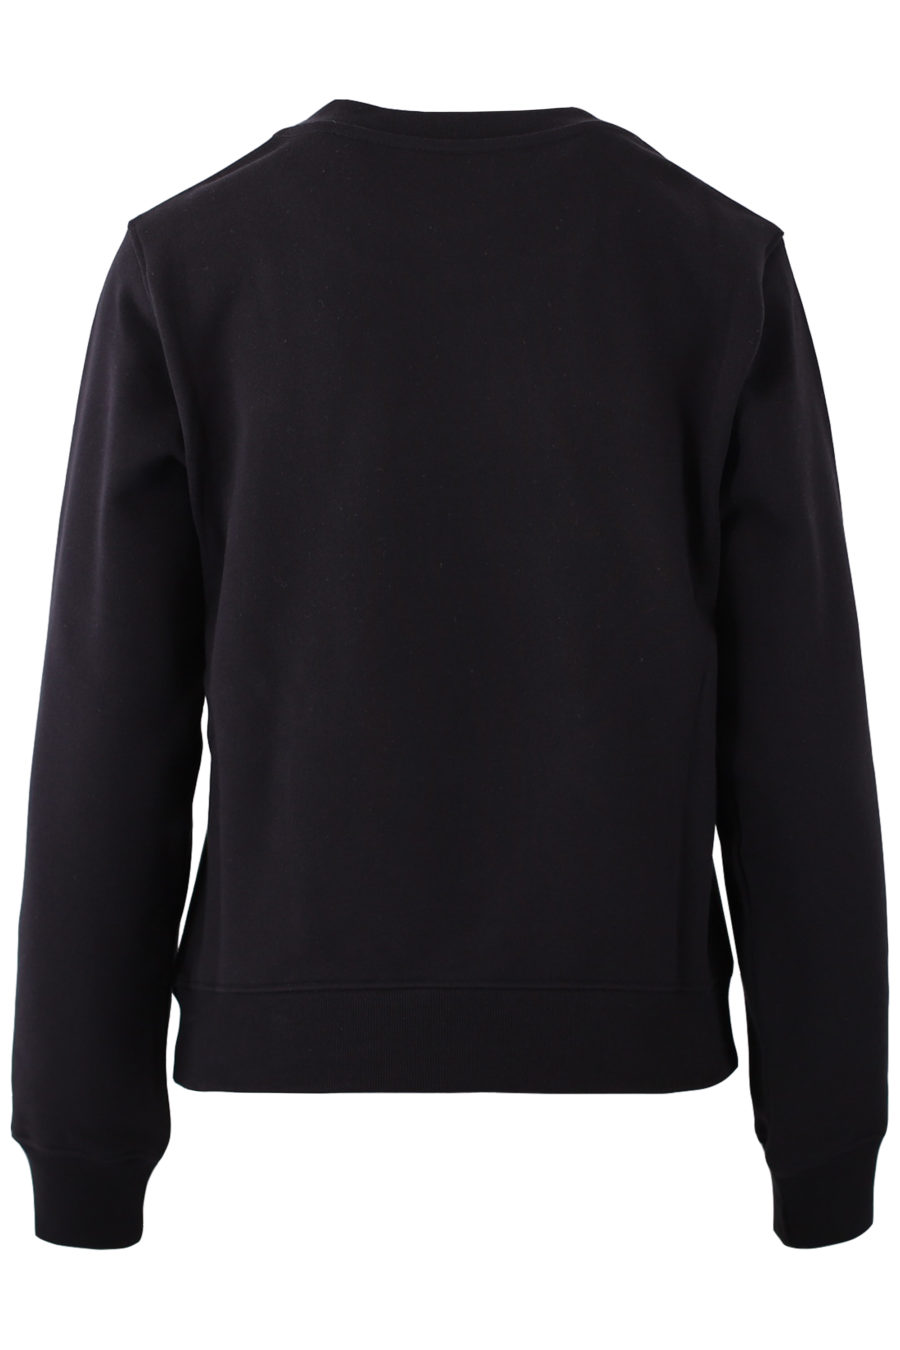 Black sweatshirt with black logo - 0b662173d8f3887d7c0c44dc52e9f6b255fe5bdb